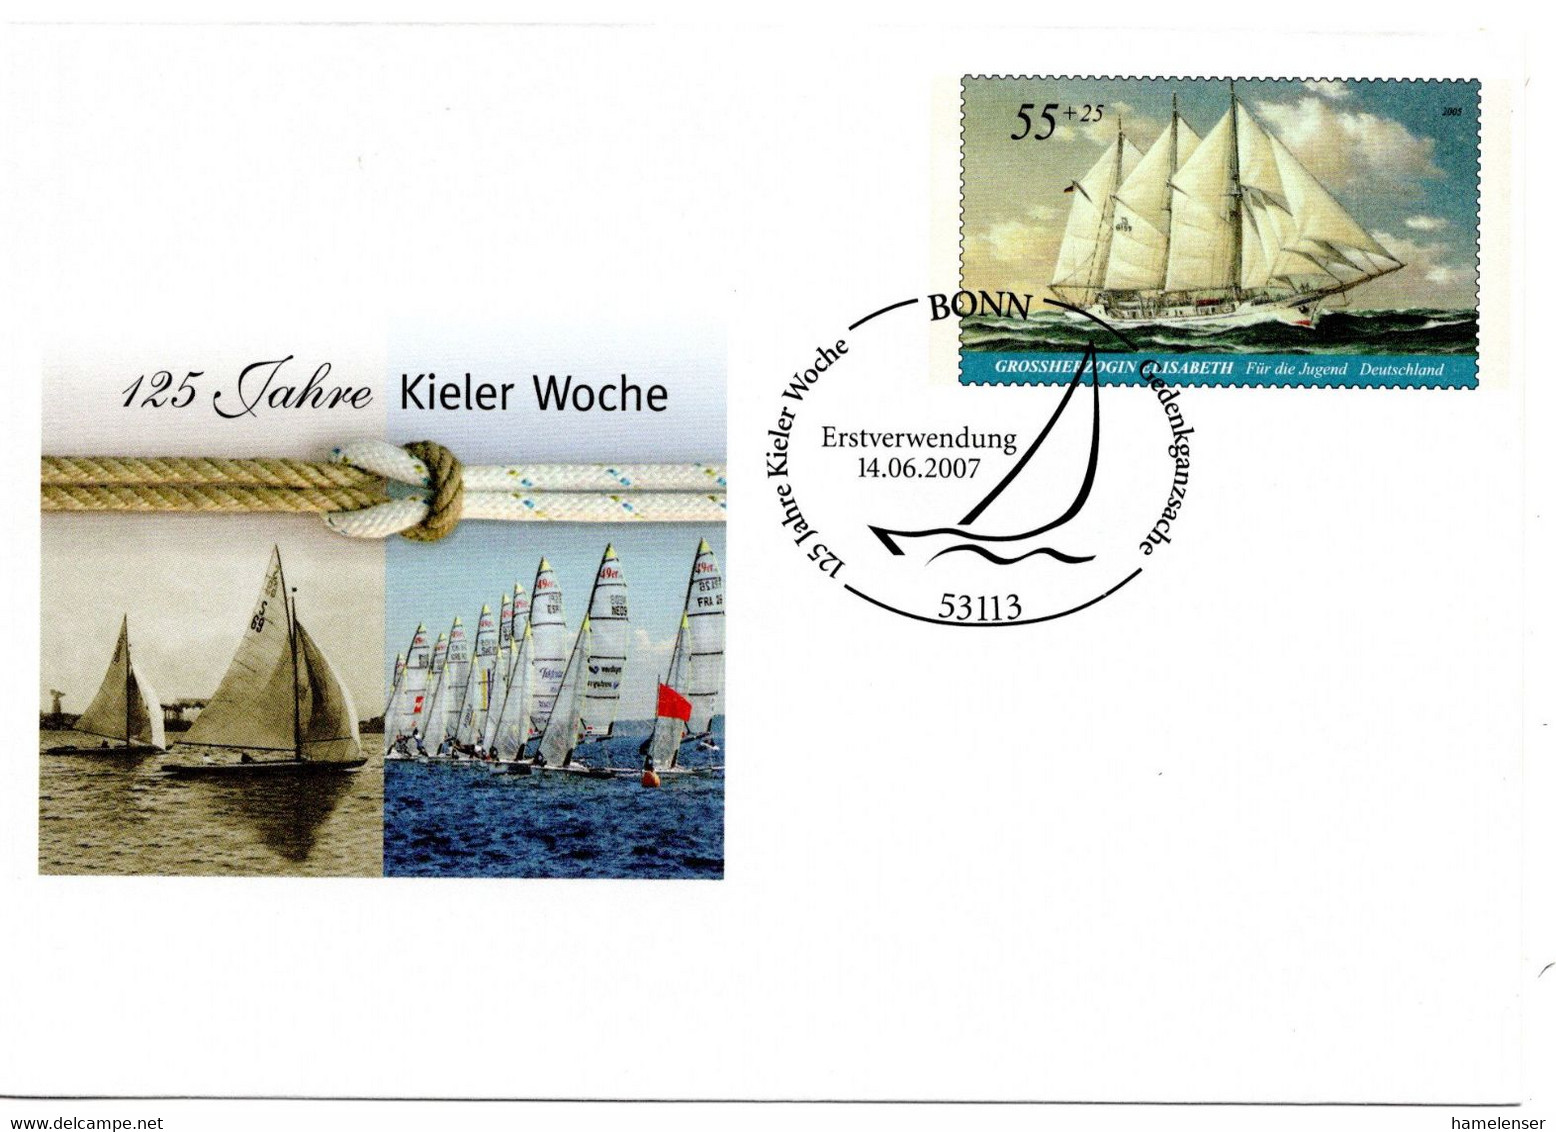 57340 - Bund - 2007 - €0,55 Kieler Woche '07 GASoUmschl BONN - 125 JAHRE KIELER WOCHE - Ships